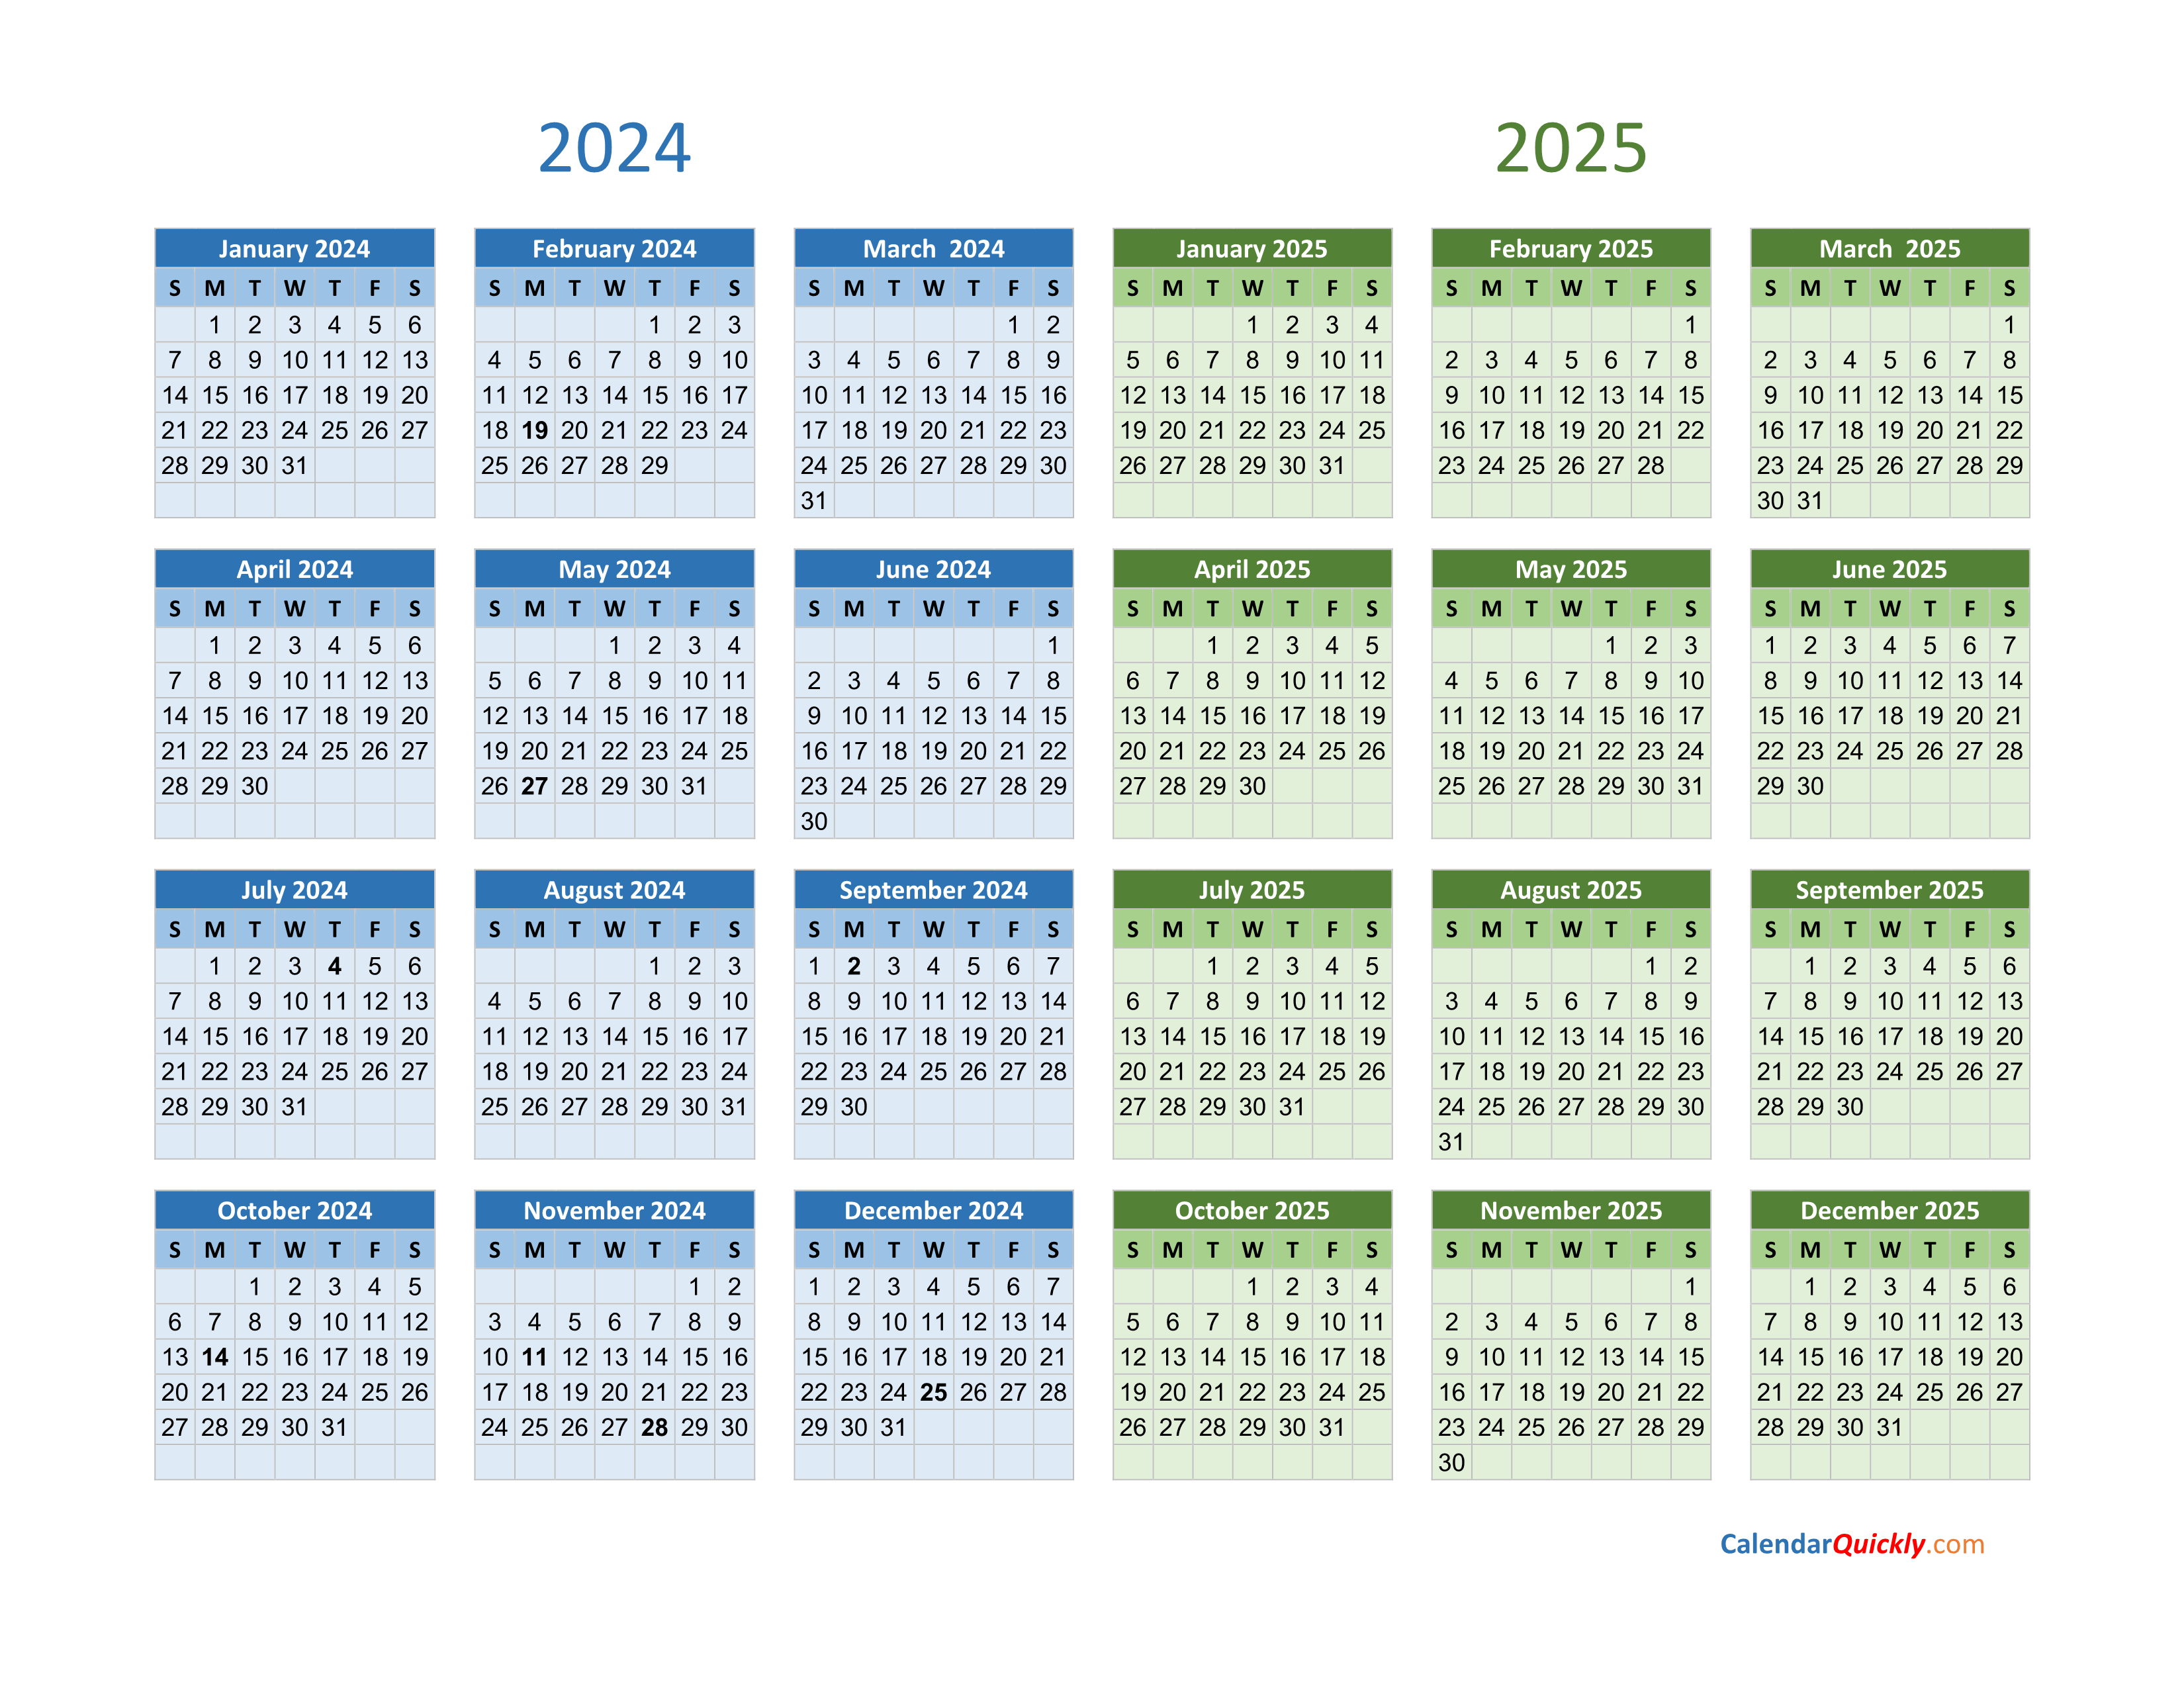 2024 And 2025 Calendar Calendar Quickly | Free Printable 2024 And 2025 Calendar Planner